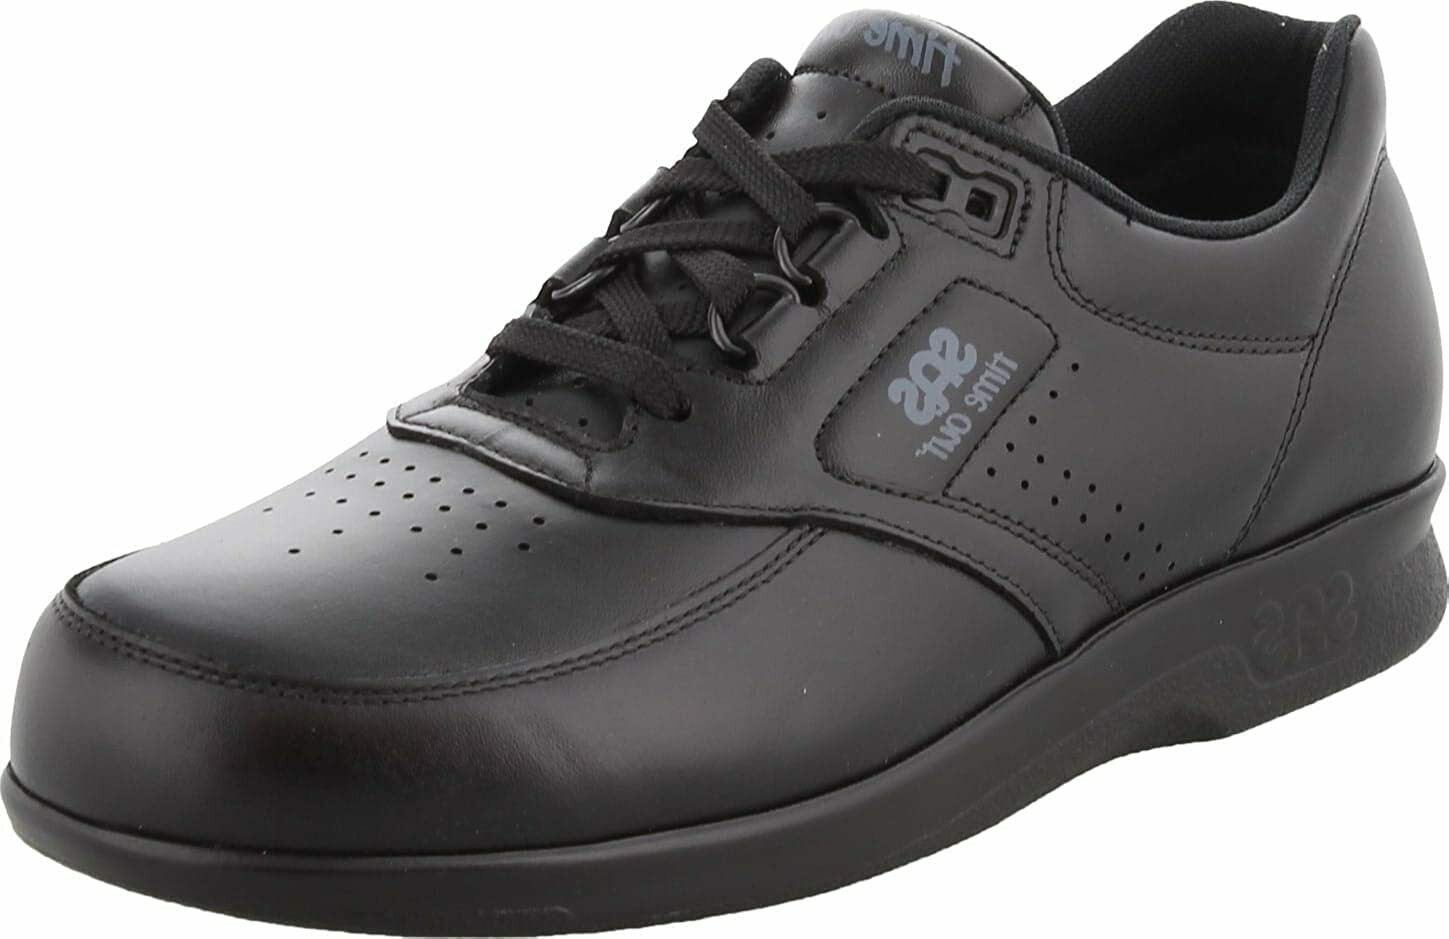 SAS Men's Walking Shoes, Black, Size 12.5